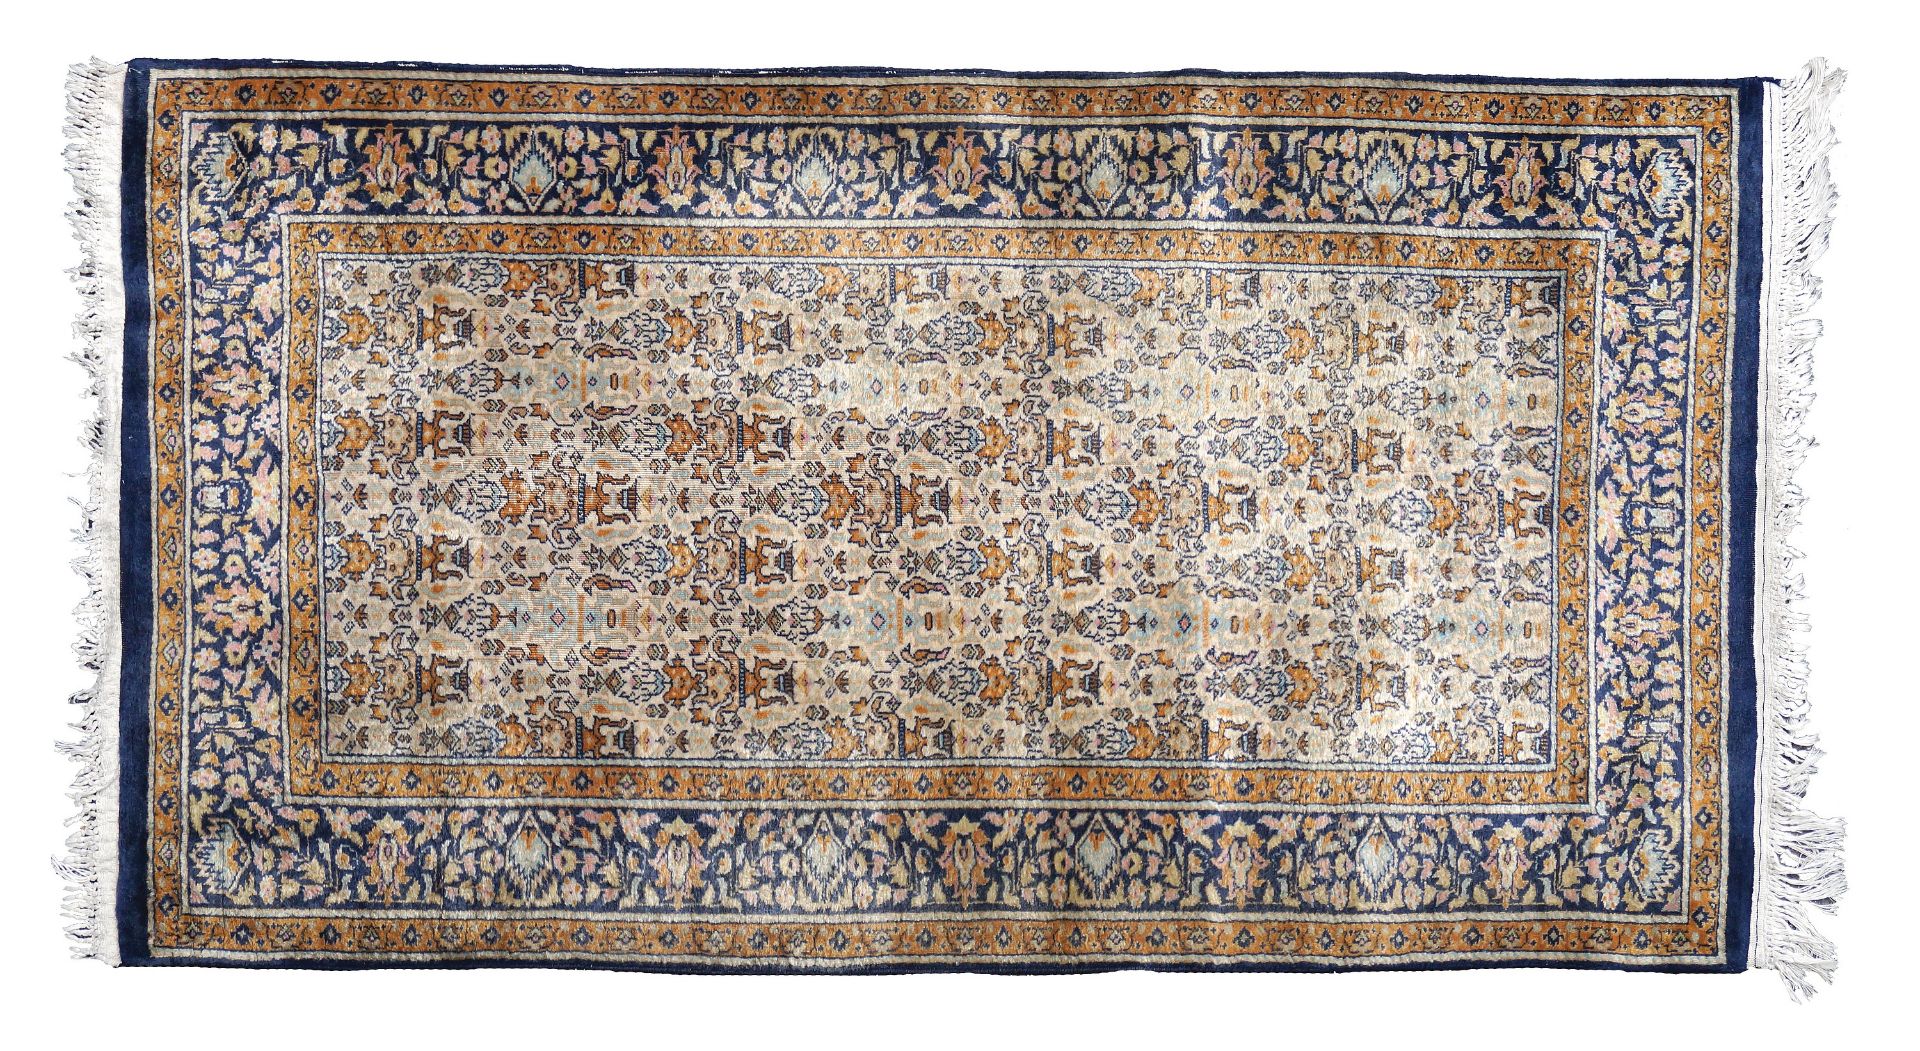 A Srinagar rug